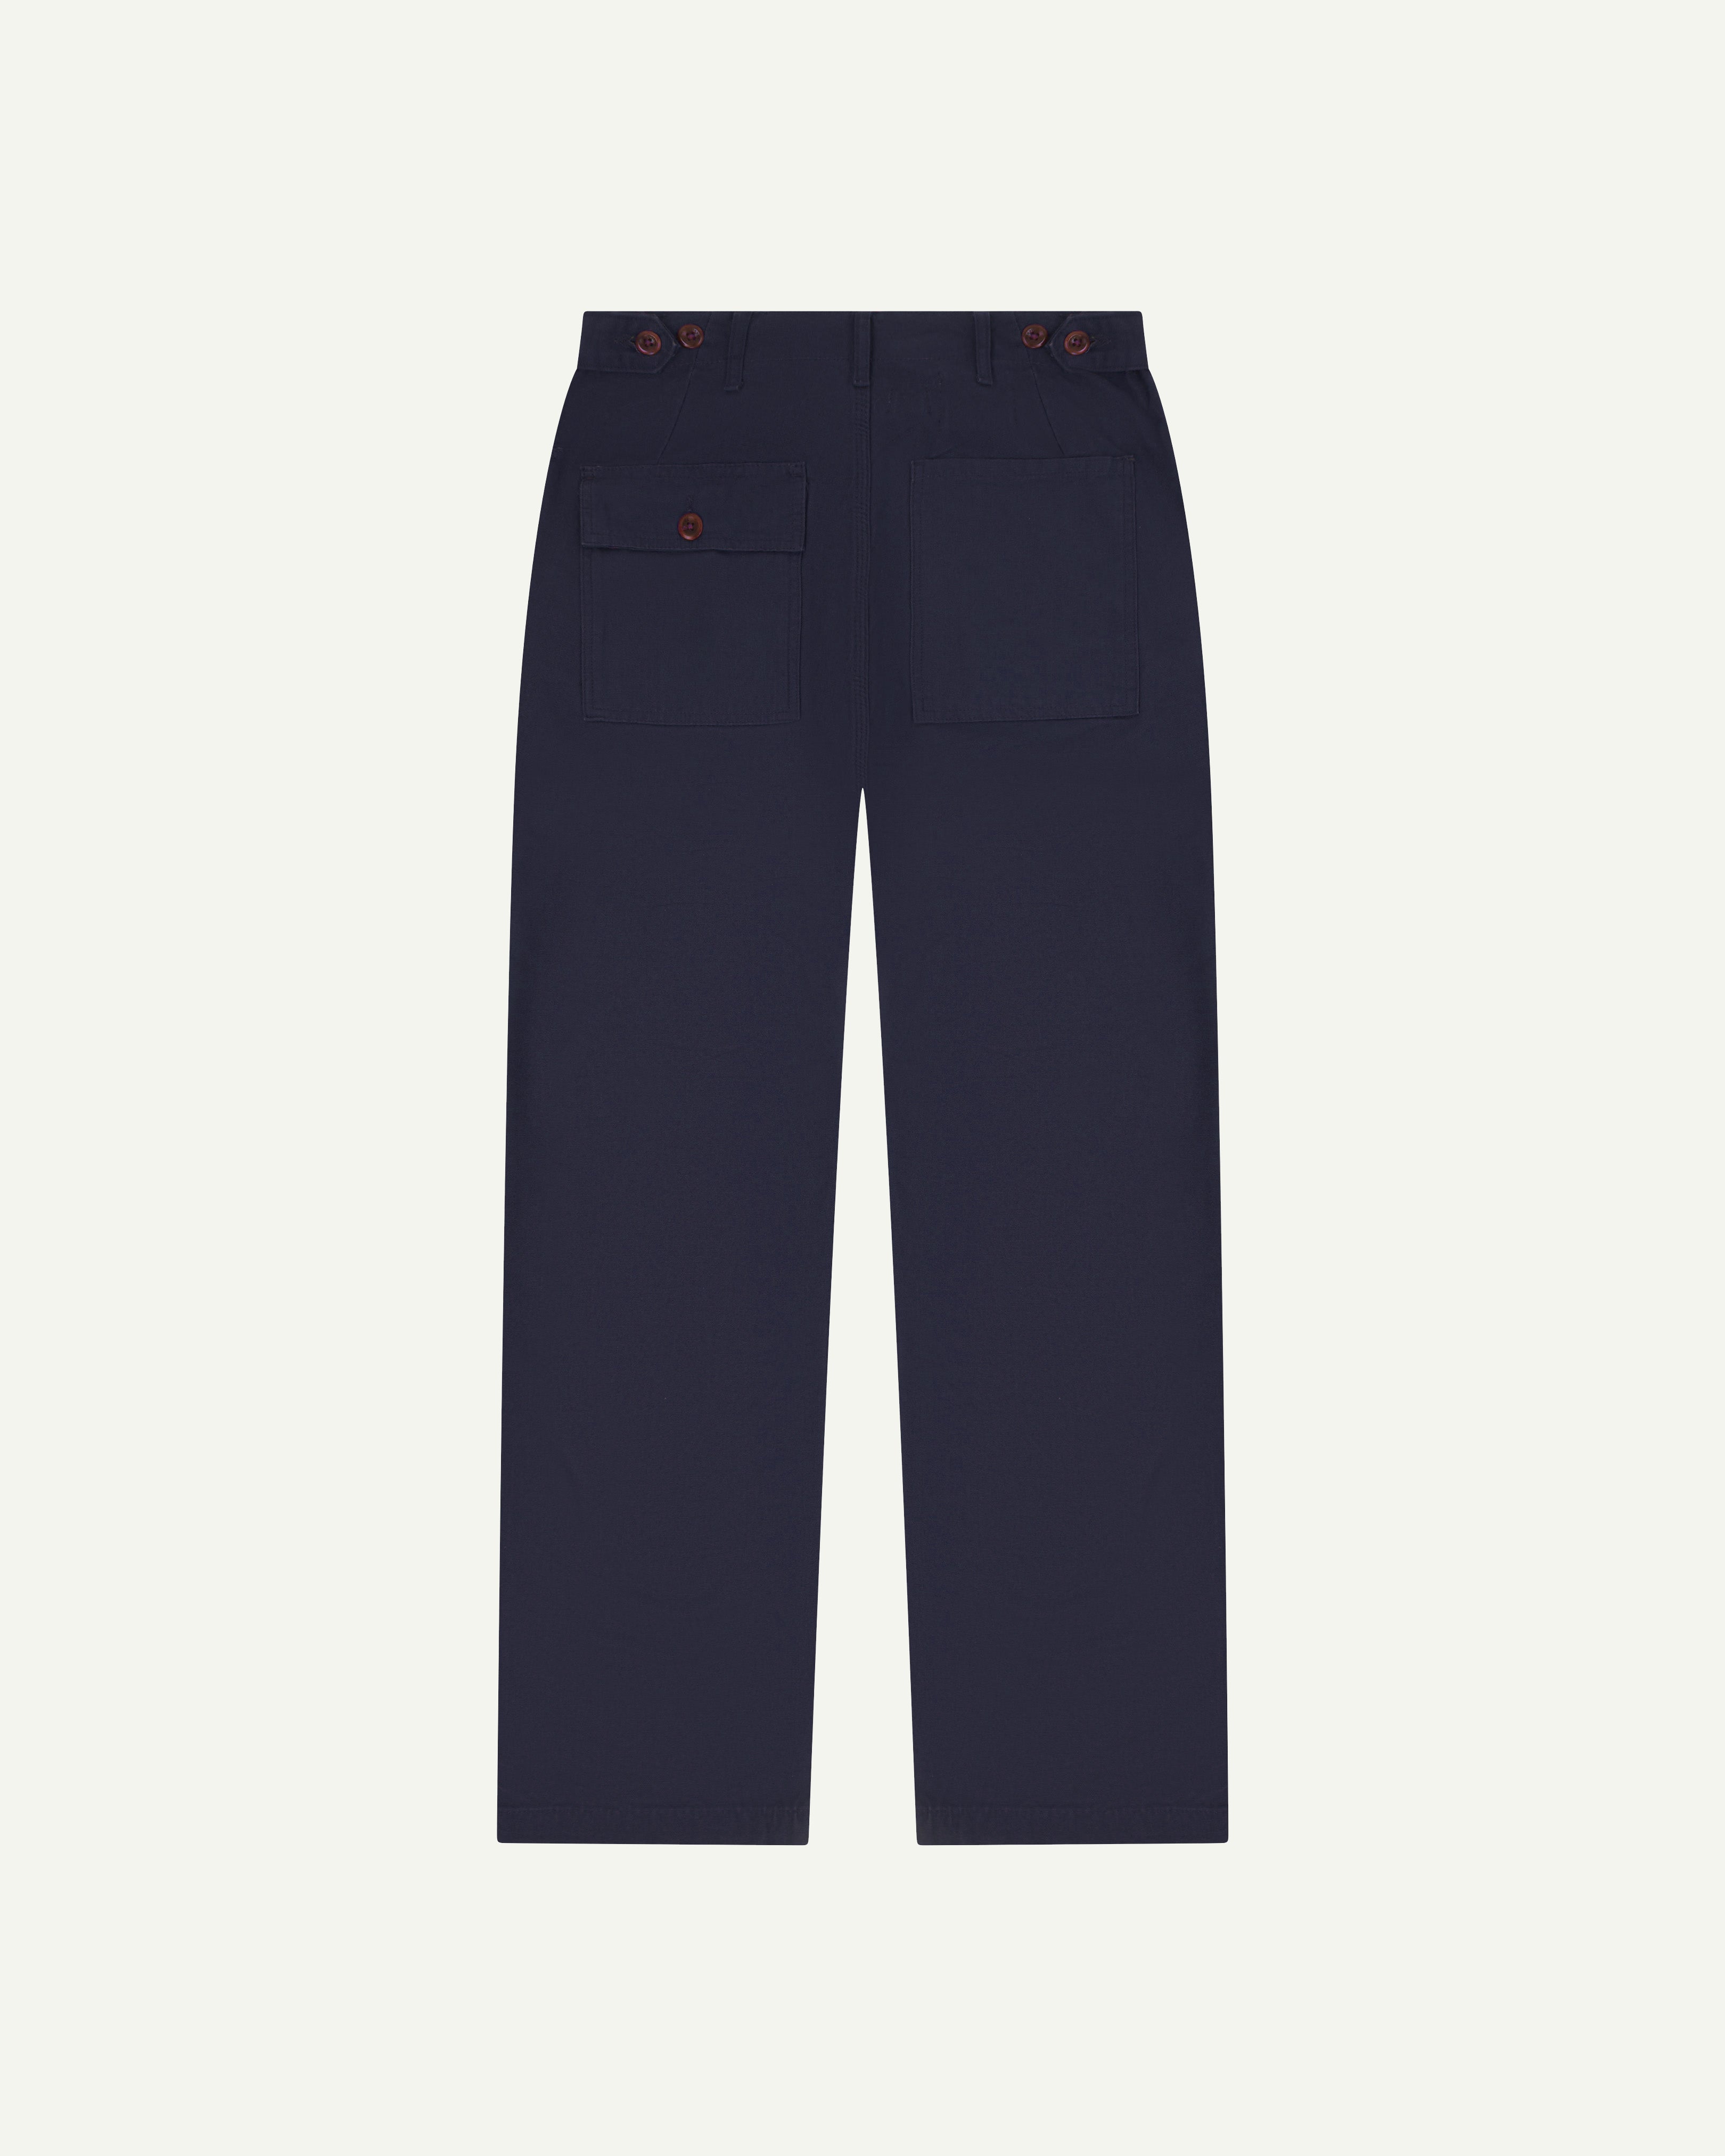 Back flat shot of uskees #5005 men's trousers in dark blue showing back pocket and waist adjuster buttons